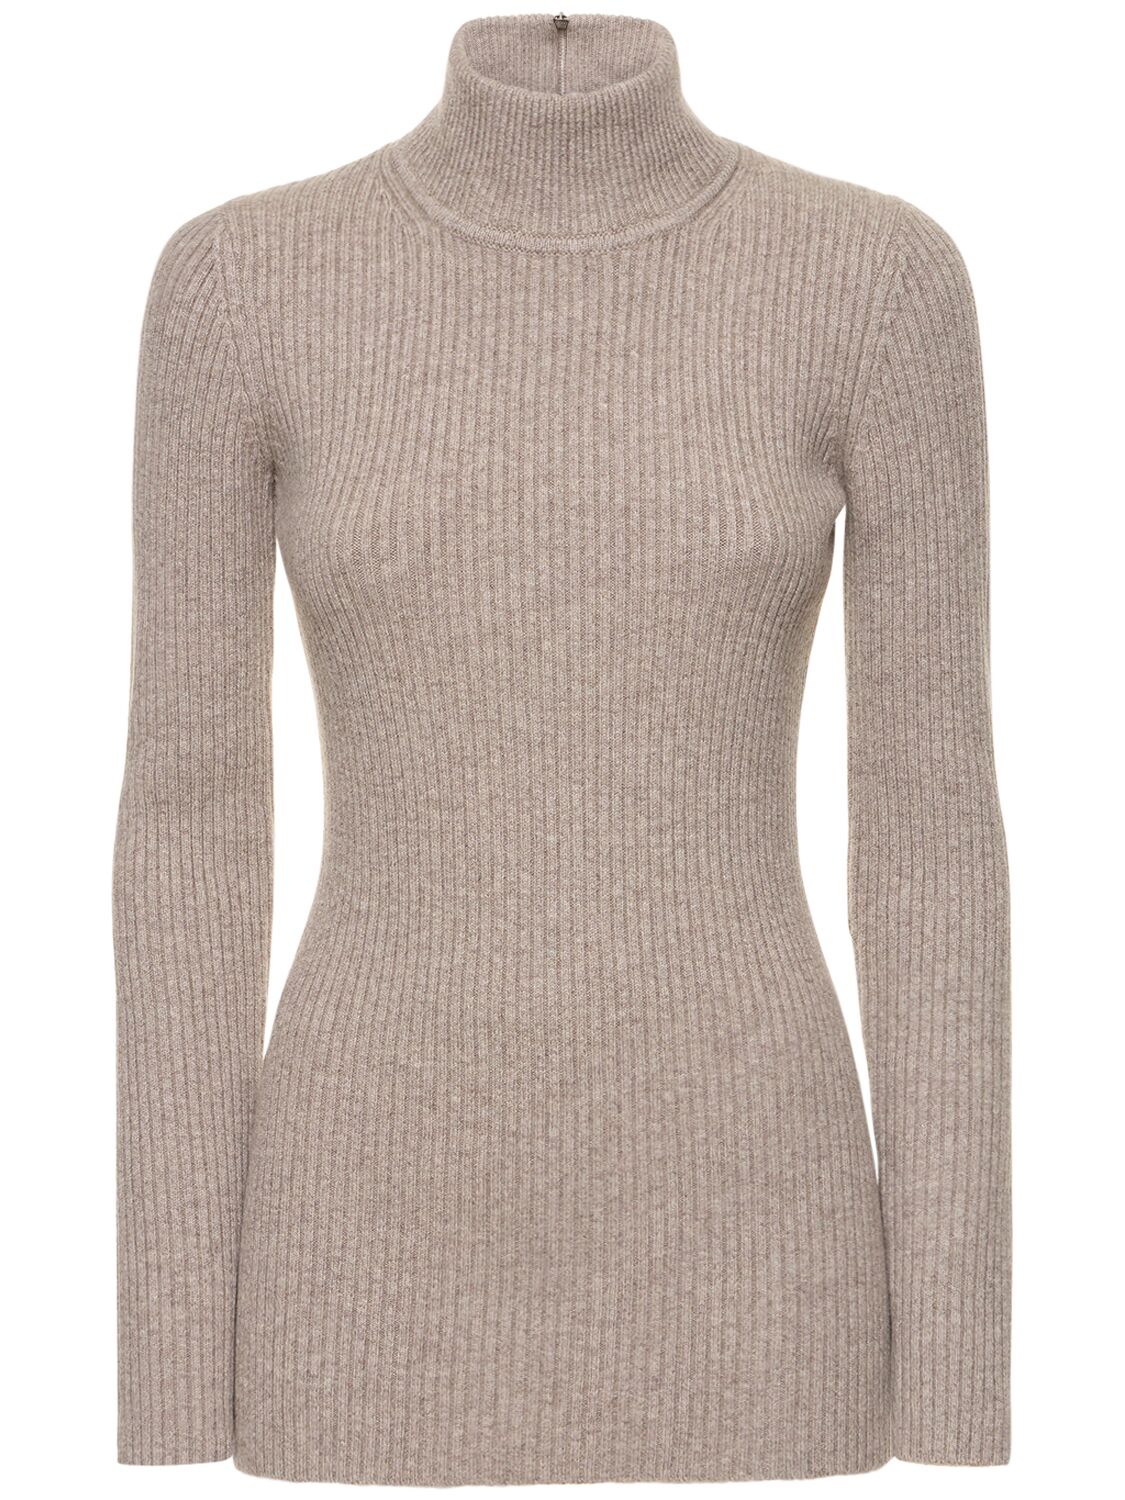 Cashmere Blend Knit Turtleneck Sweater - MICHAEL KORS COLLECTION - Modalova